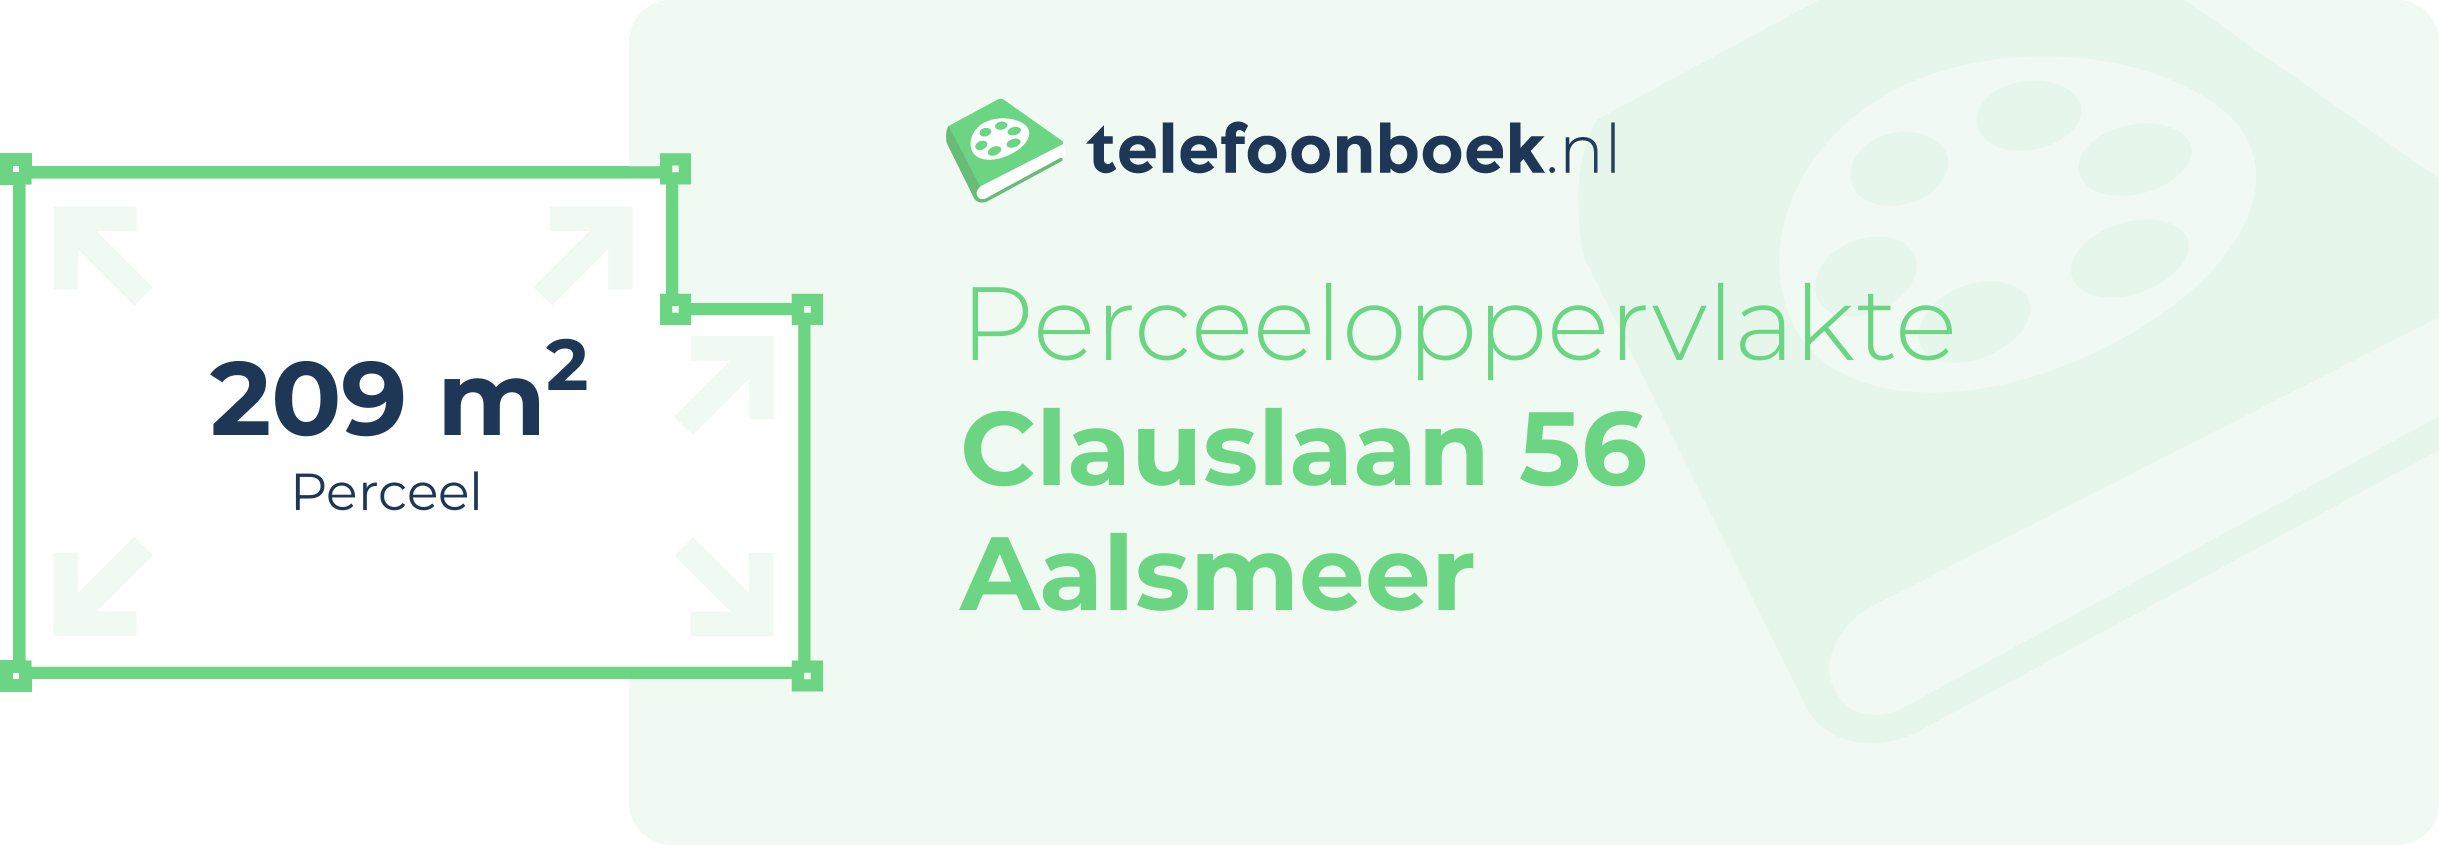 Perceeloppervlakte Clauslaan 56 Aalsmeer